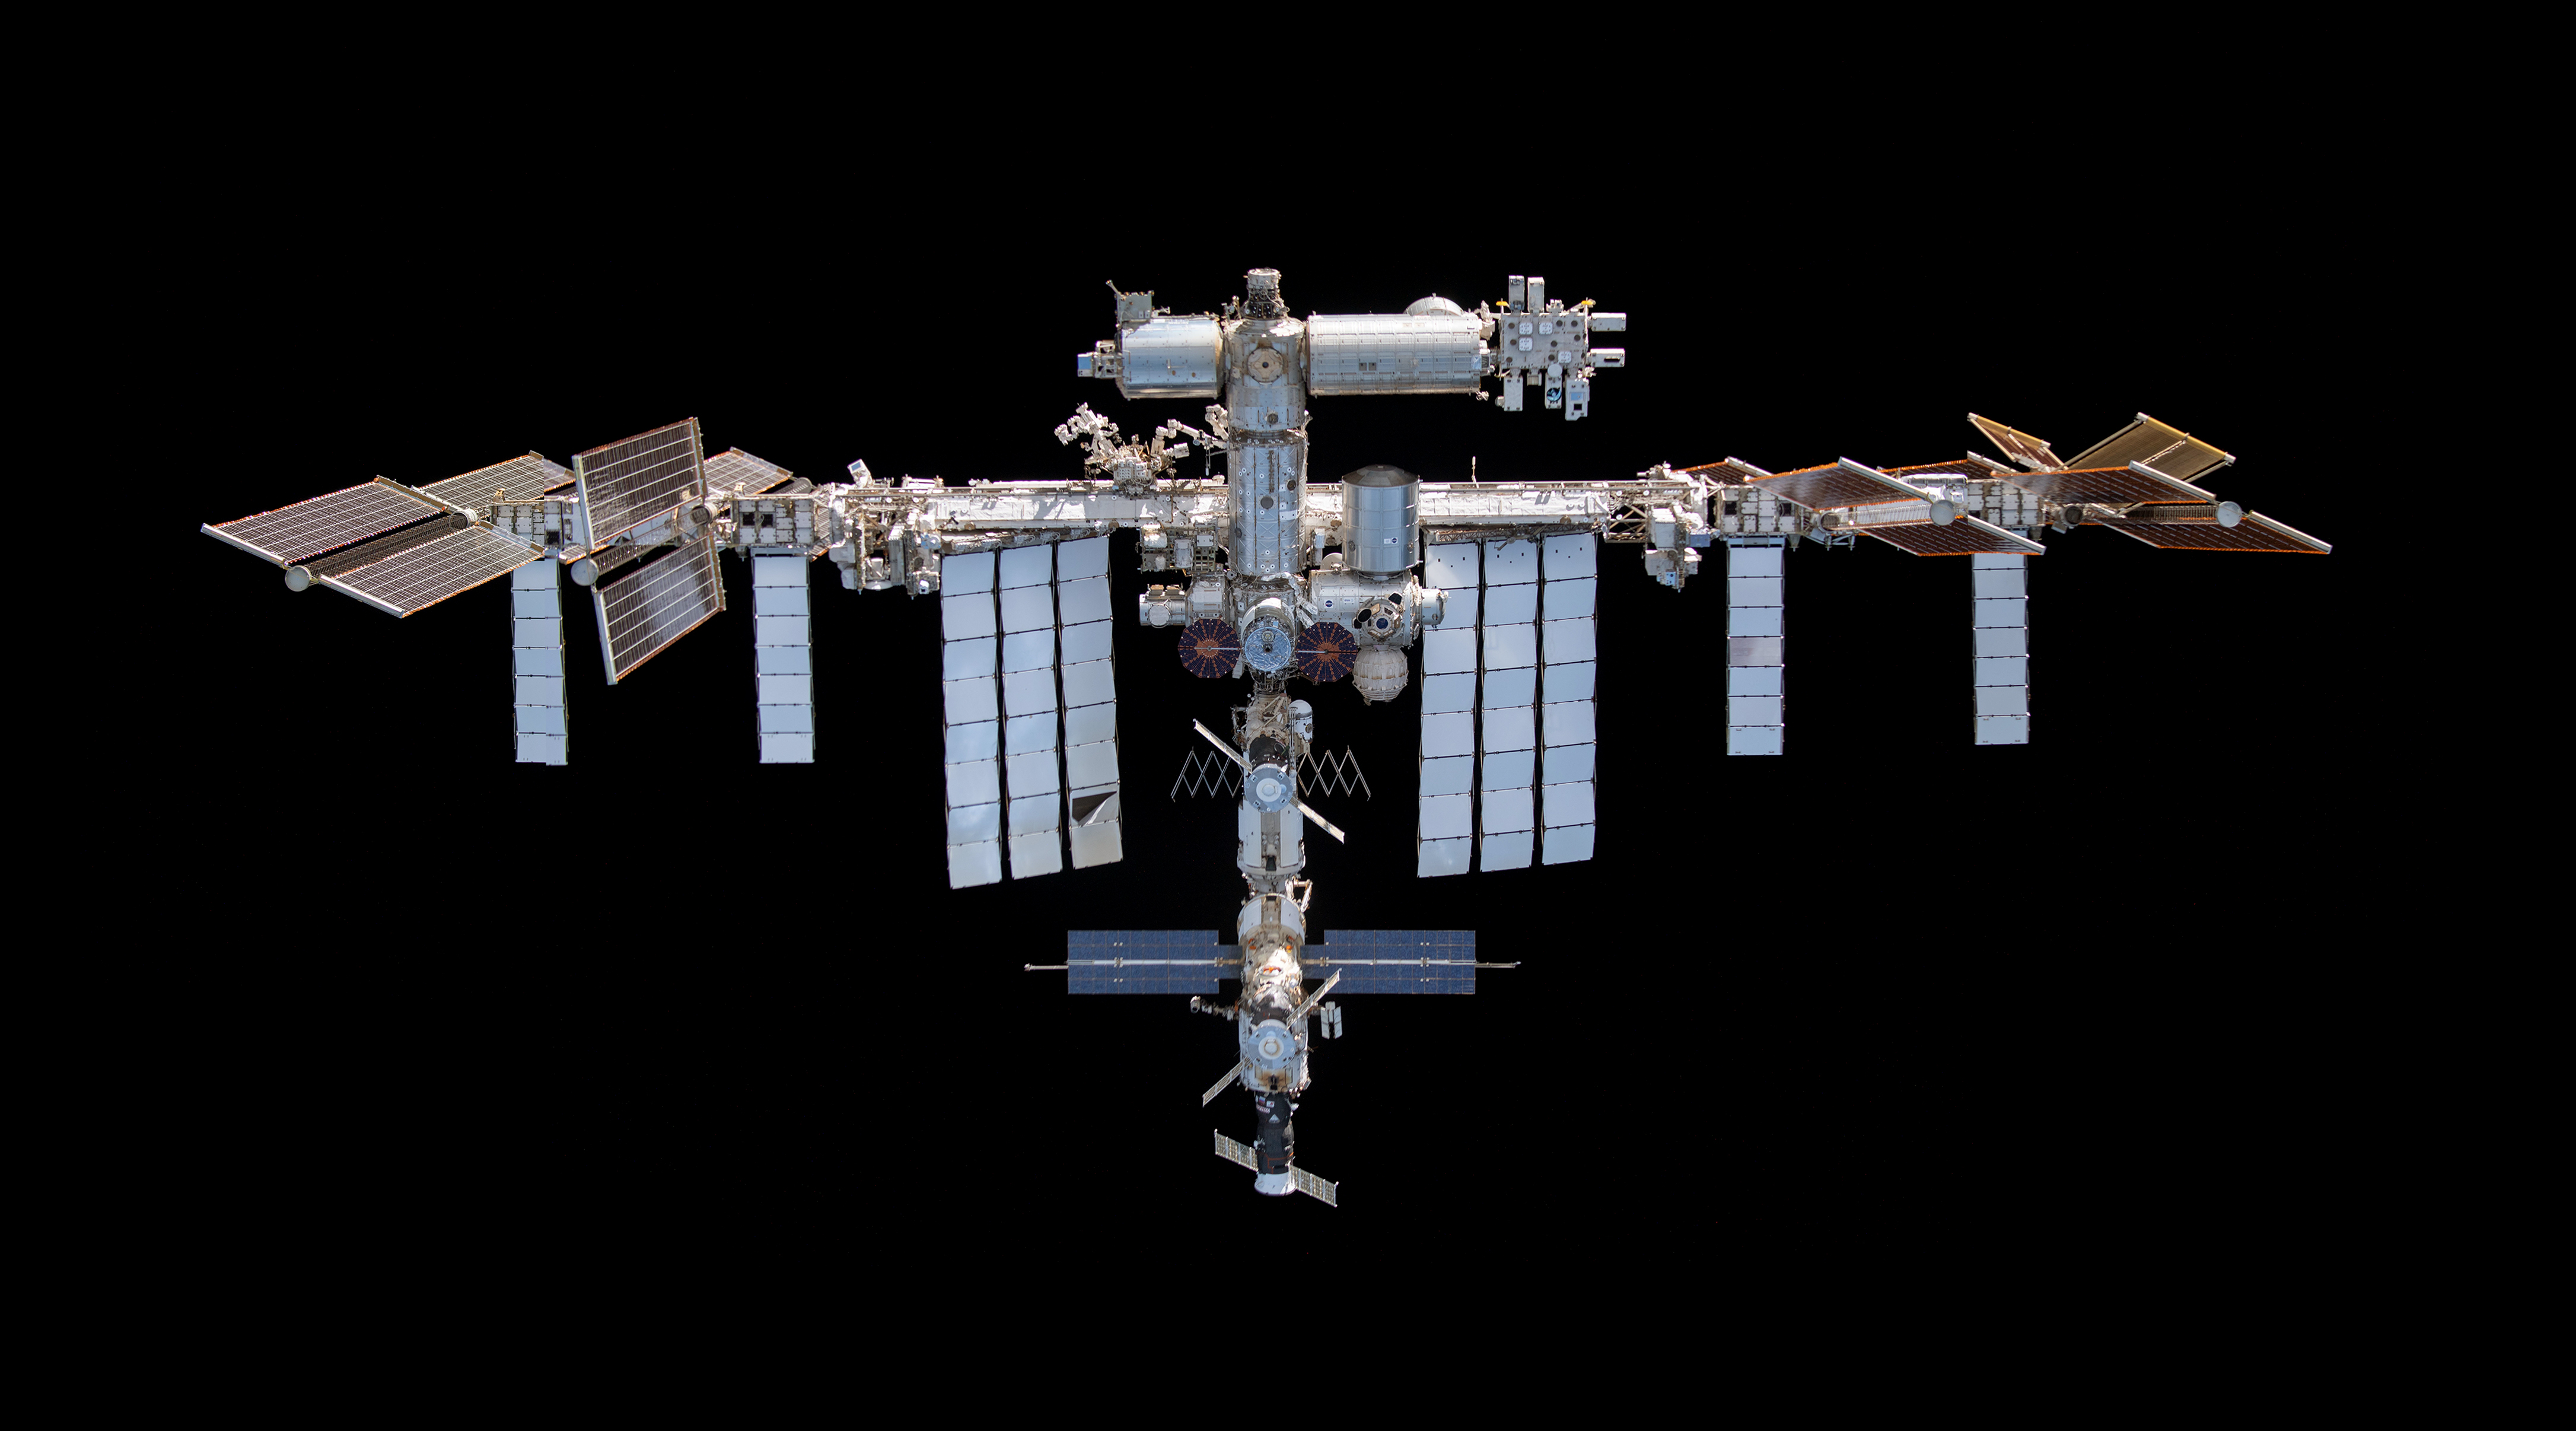 space station orbit period